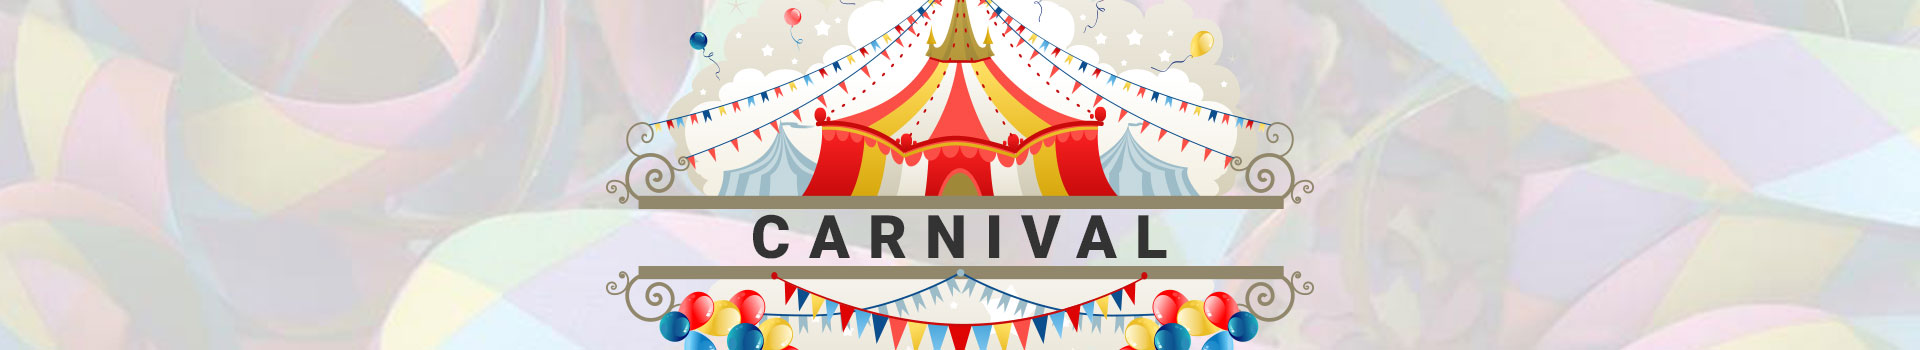 carnival clipart event